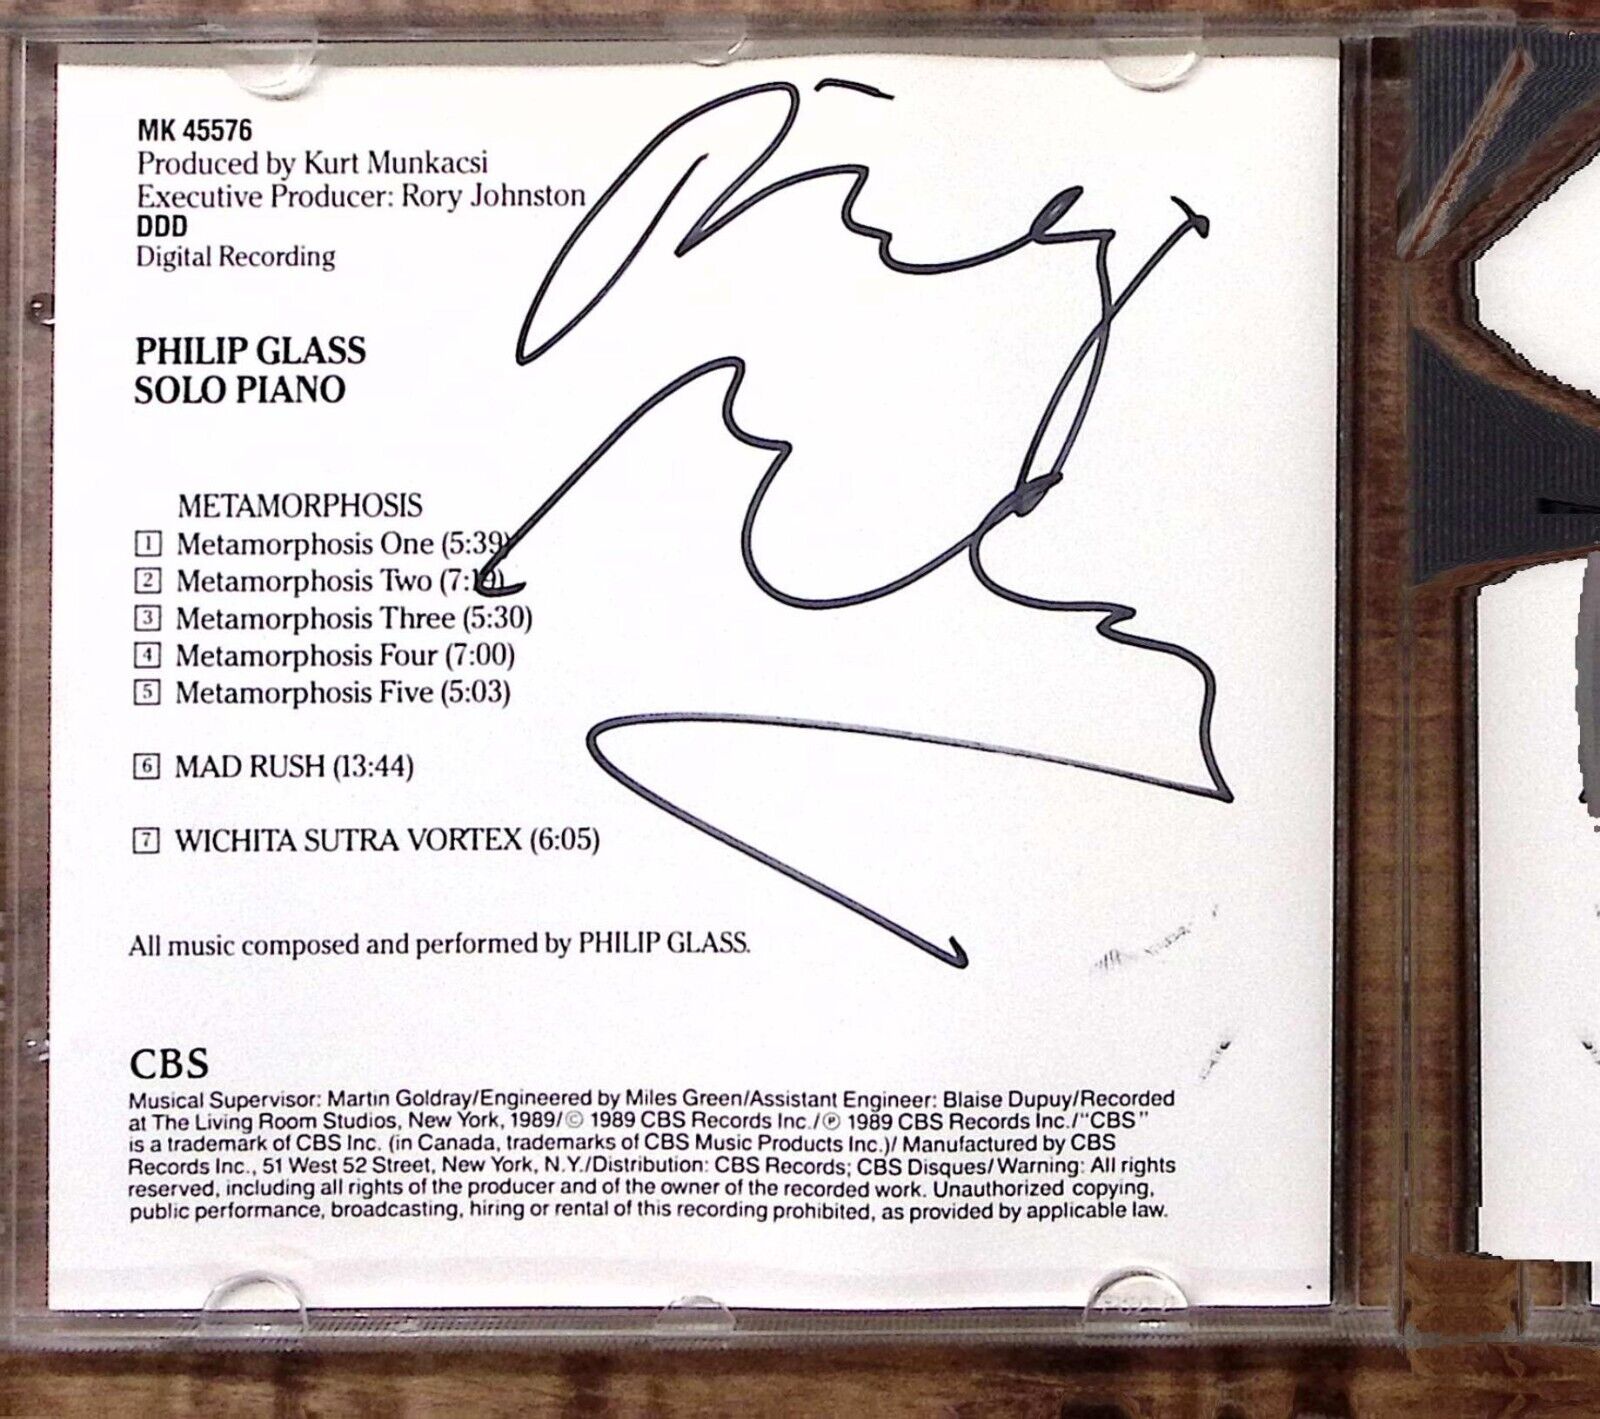 RARE AUTOGRAPHED   PHILIP GLASS  SOLO PIANO  CBS REORDS CD 3059